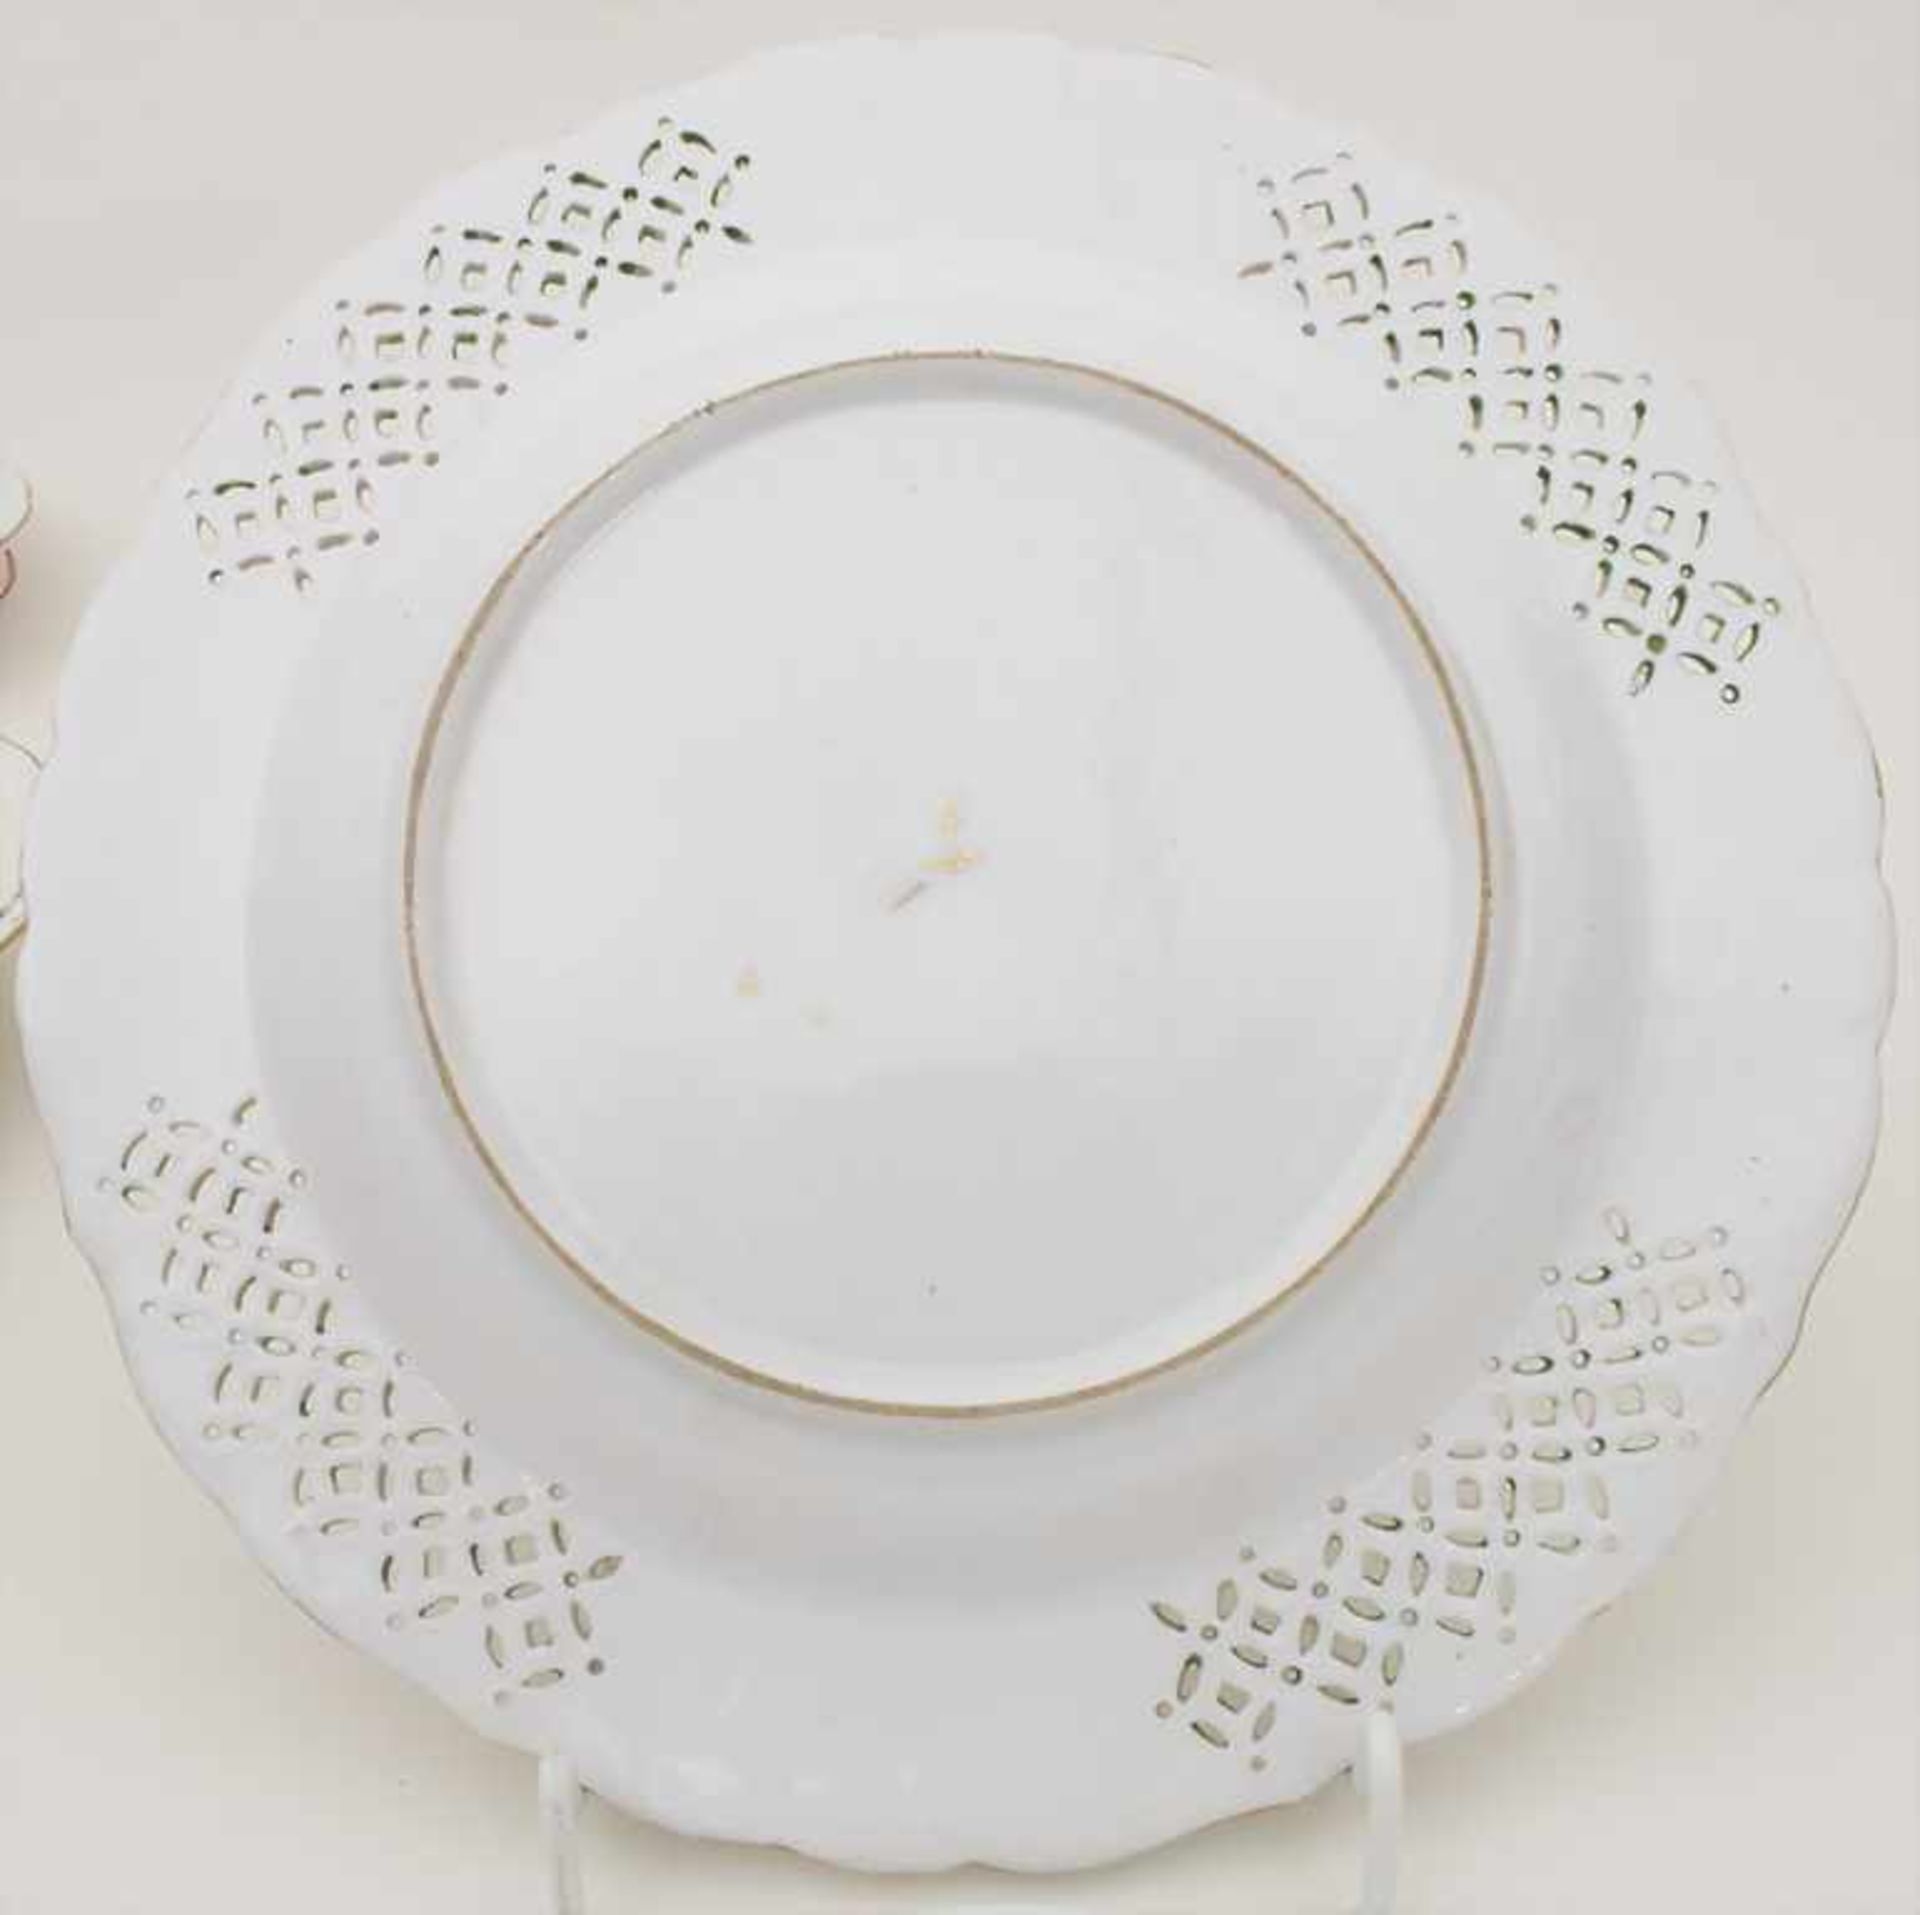 Teller / A plate, Sceaux, Frankreich / France, 19. Jh. - Image 4 of 5